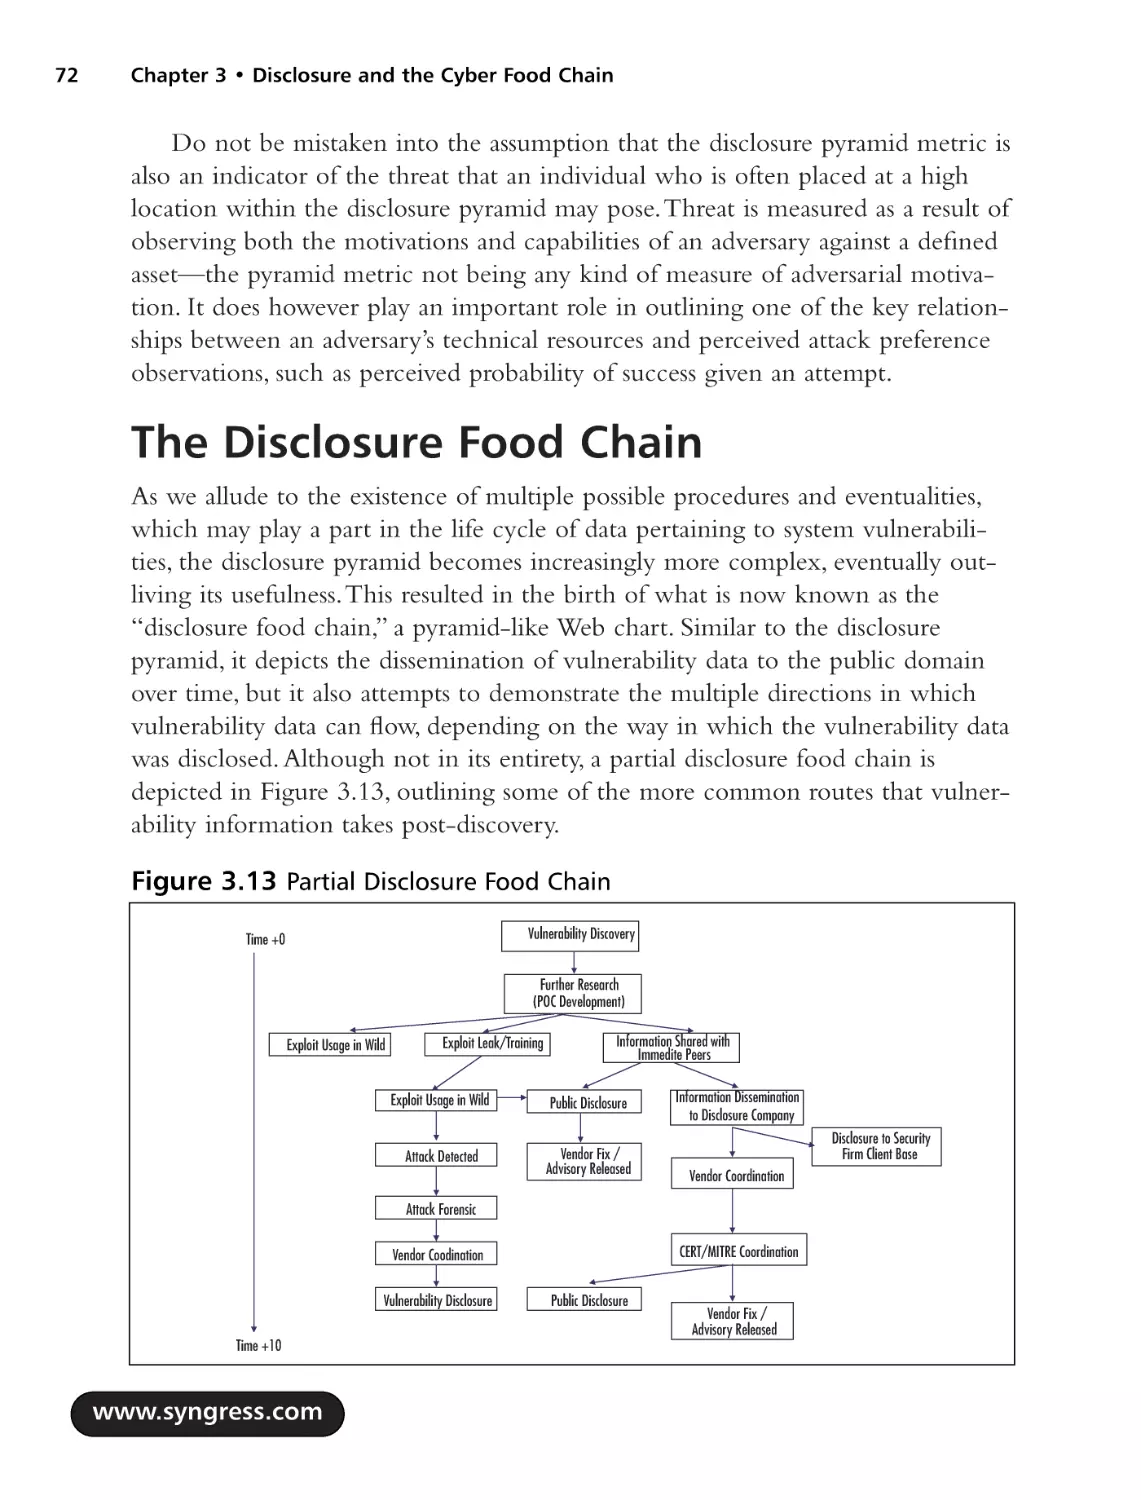 The Disclosure Food Chain